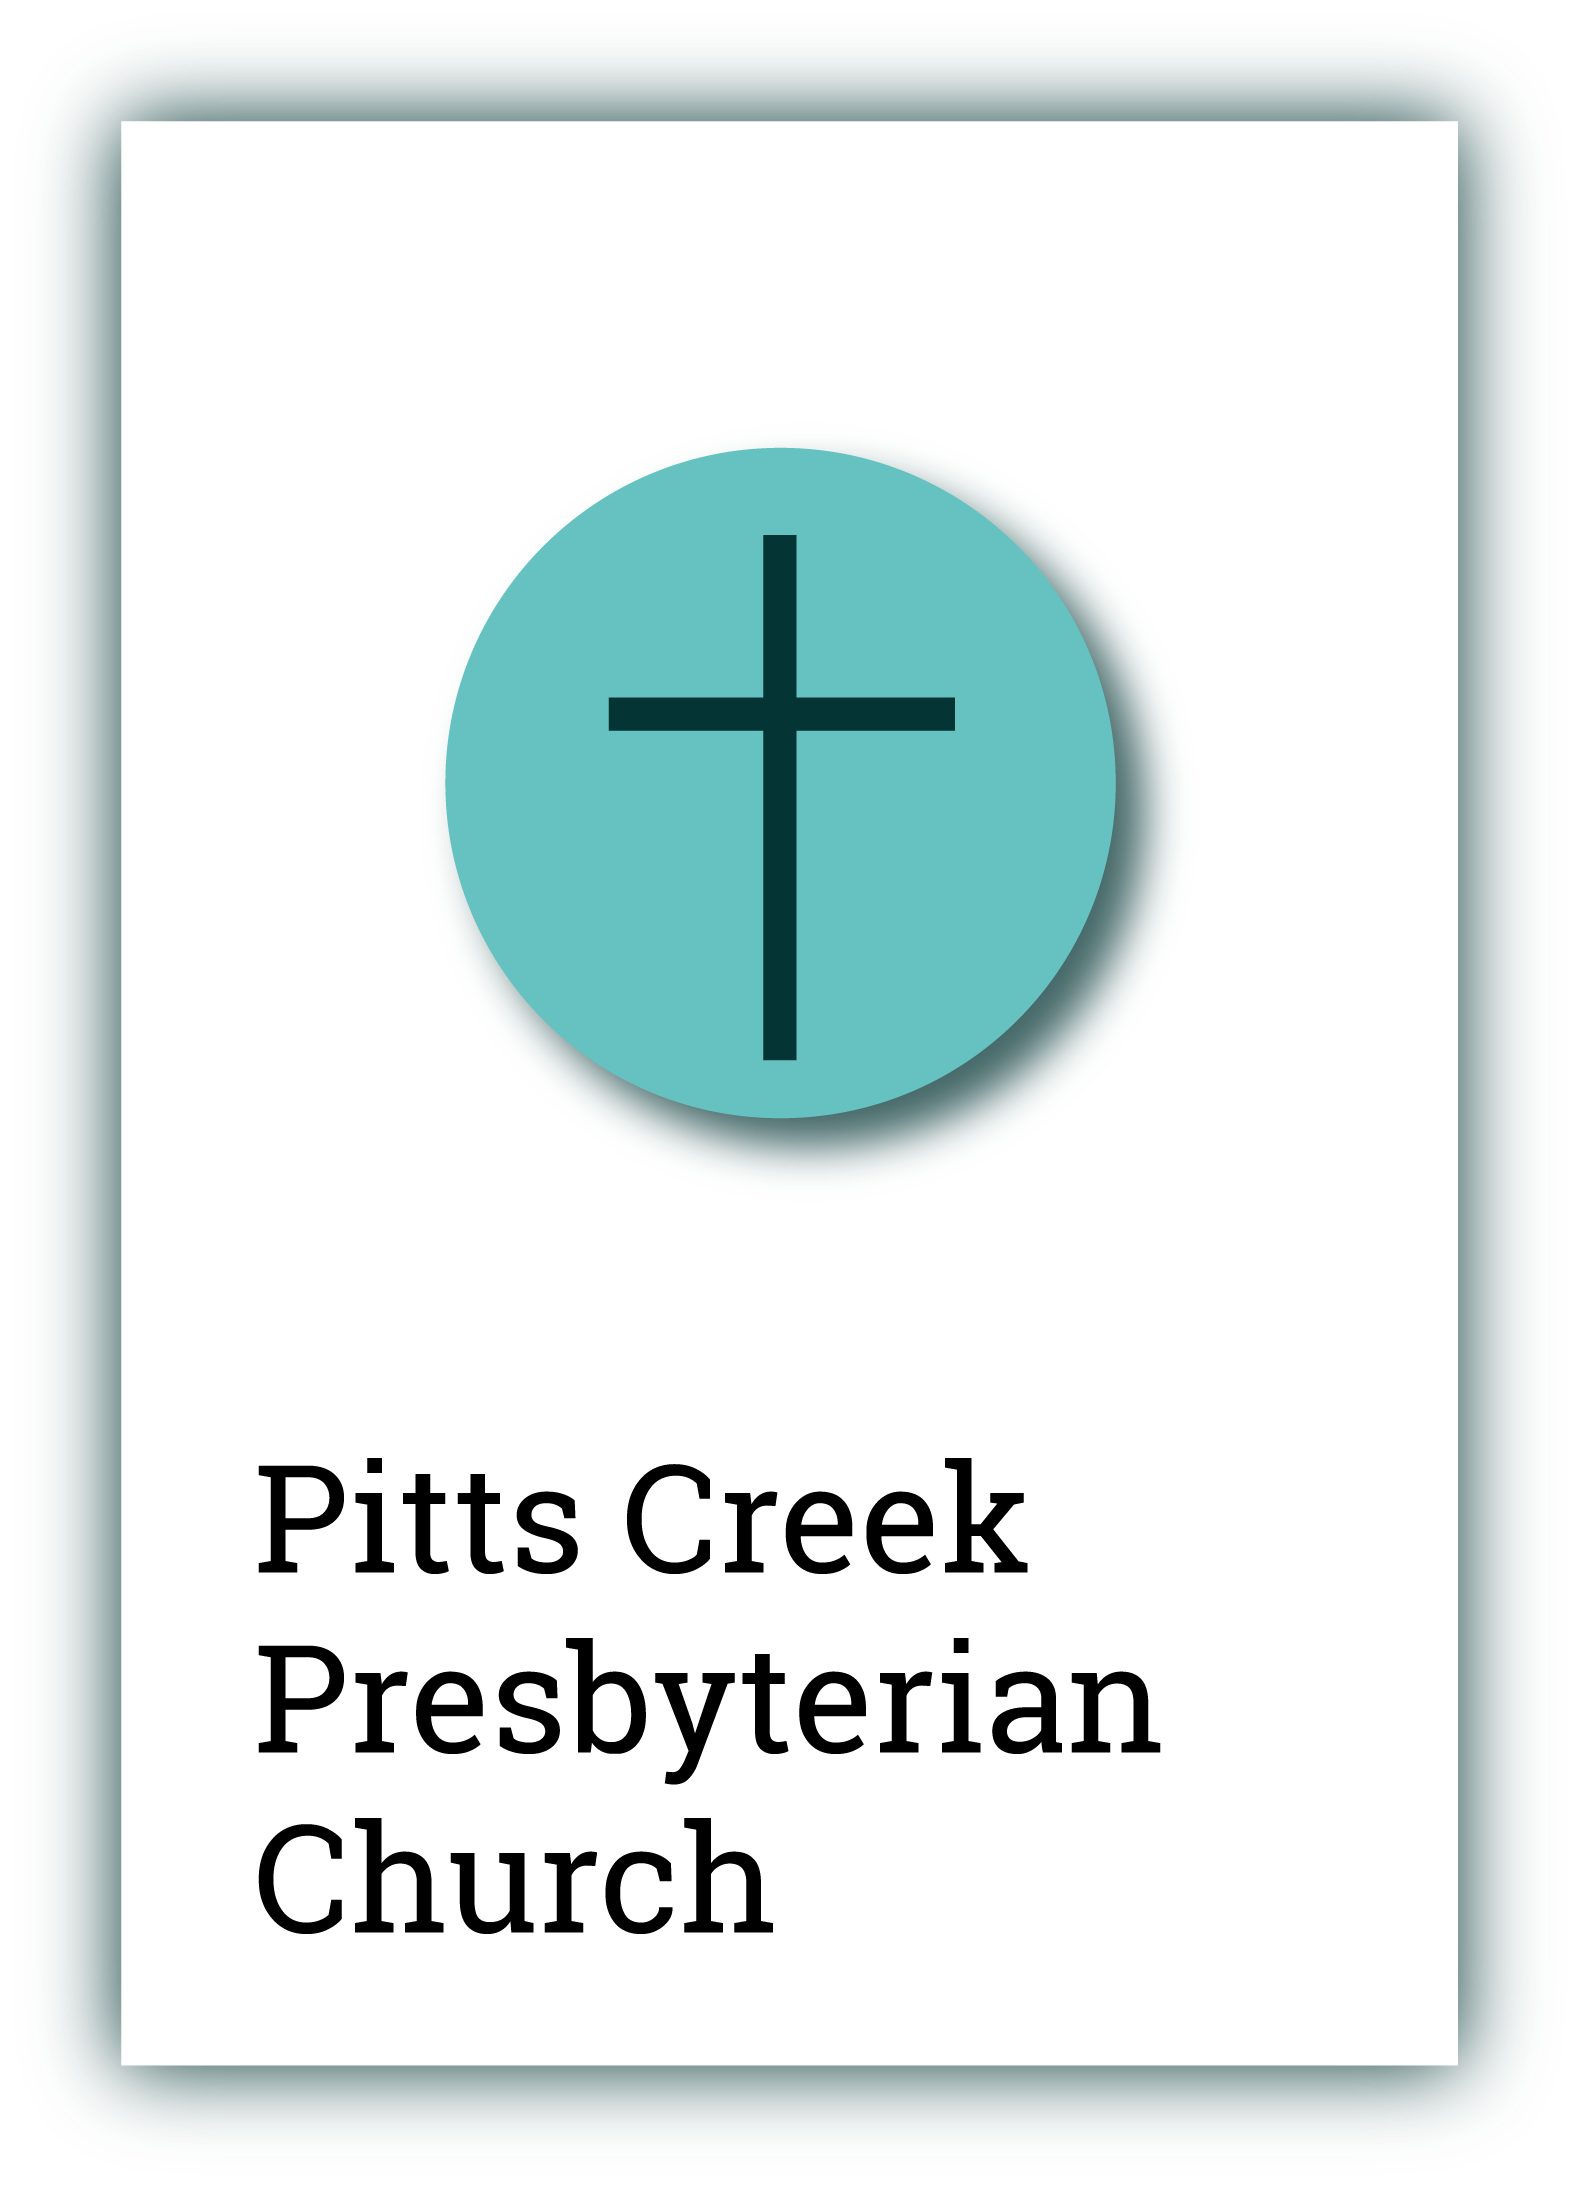 Pitts Creek Presbyterian Church